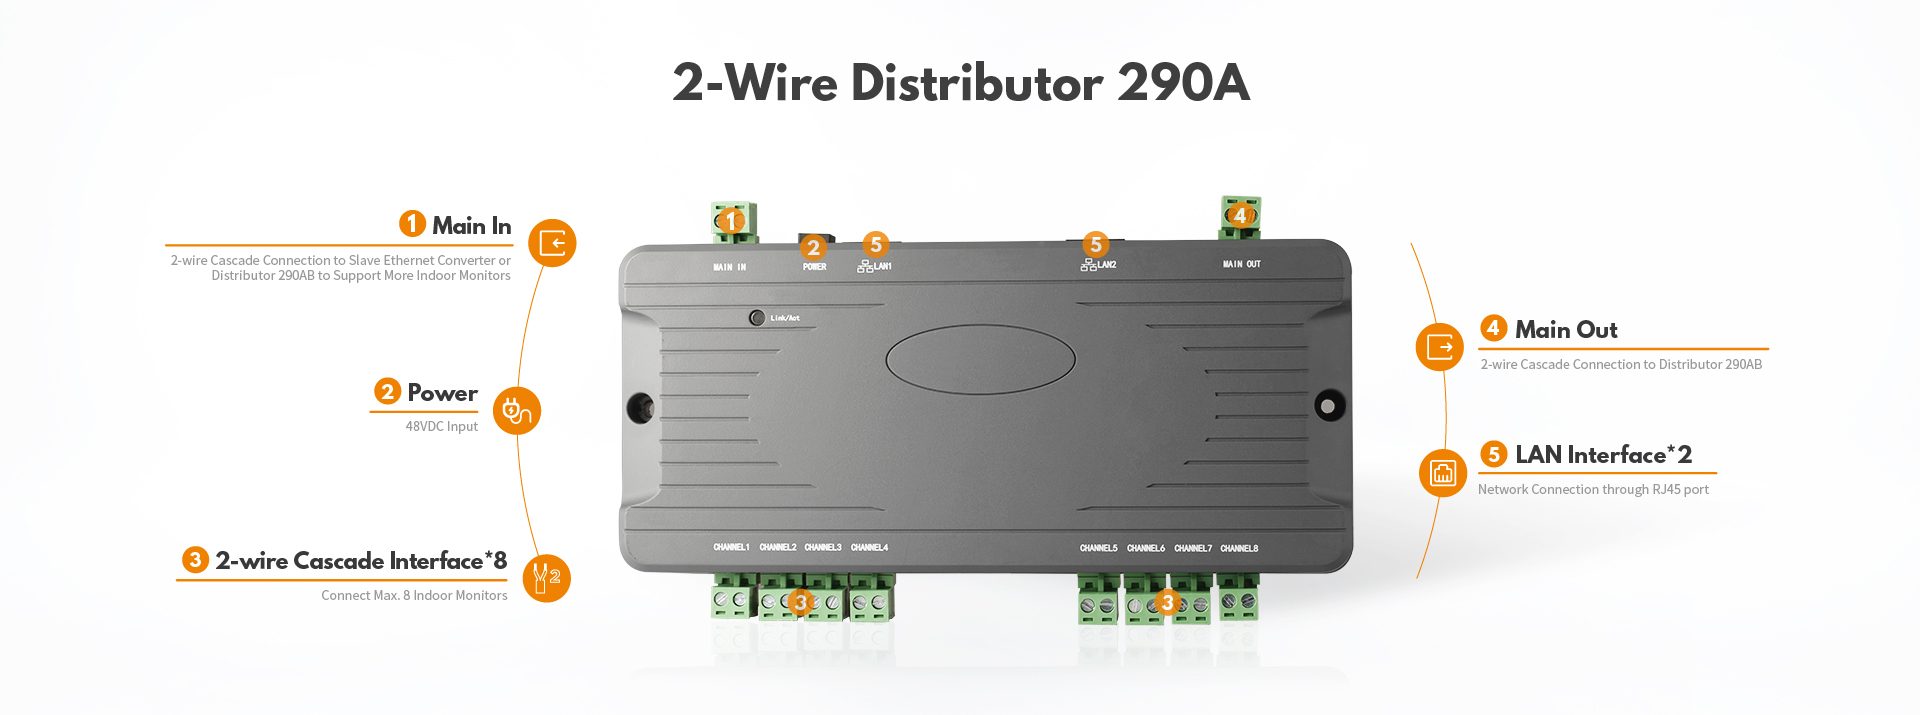 2-Wire Distributor 290A